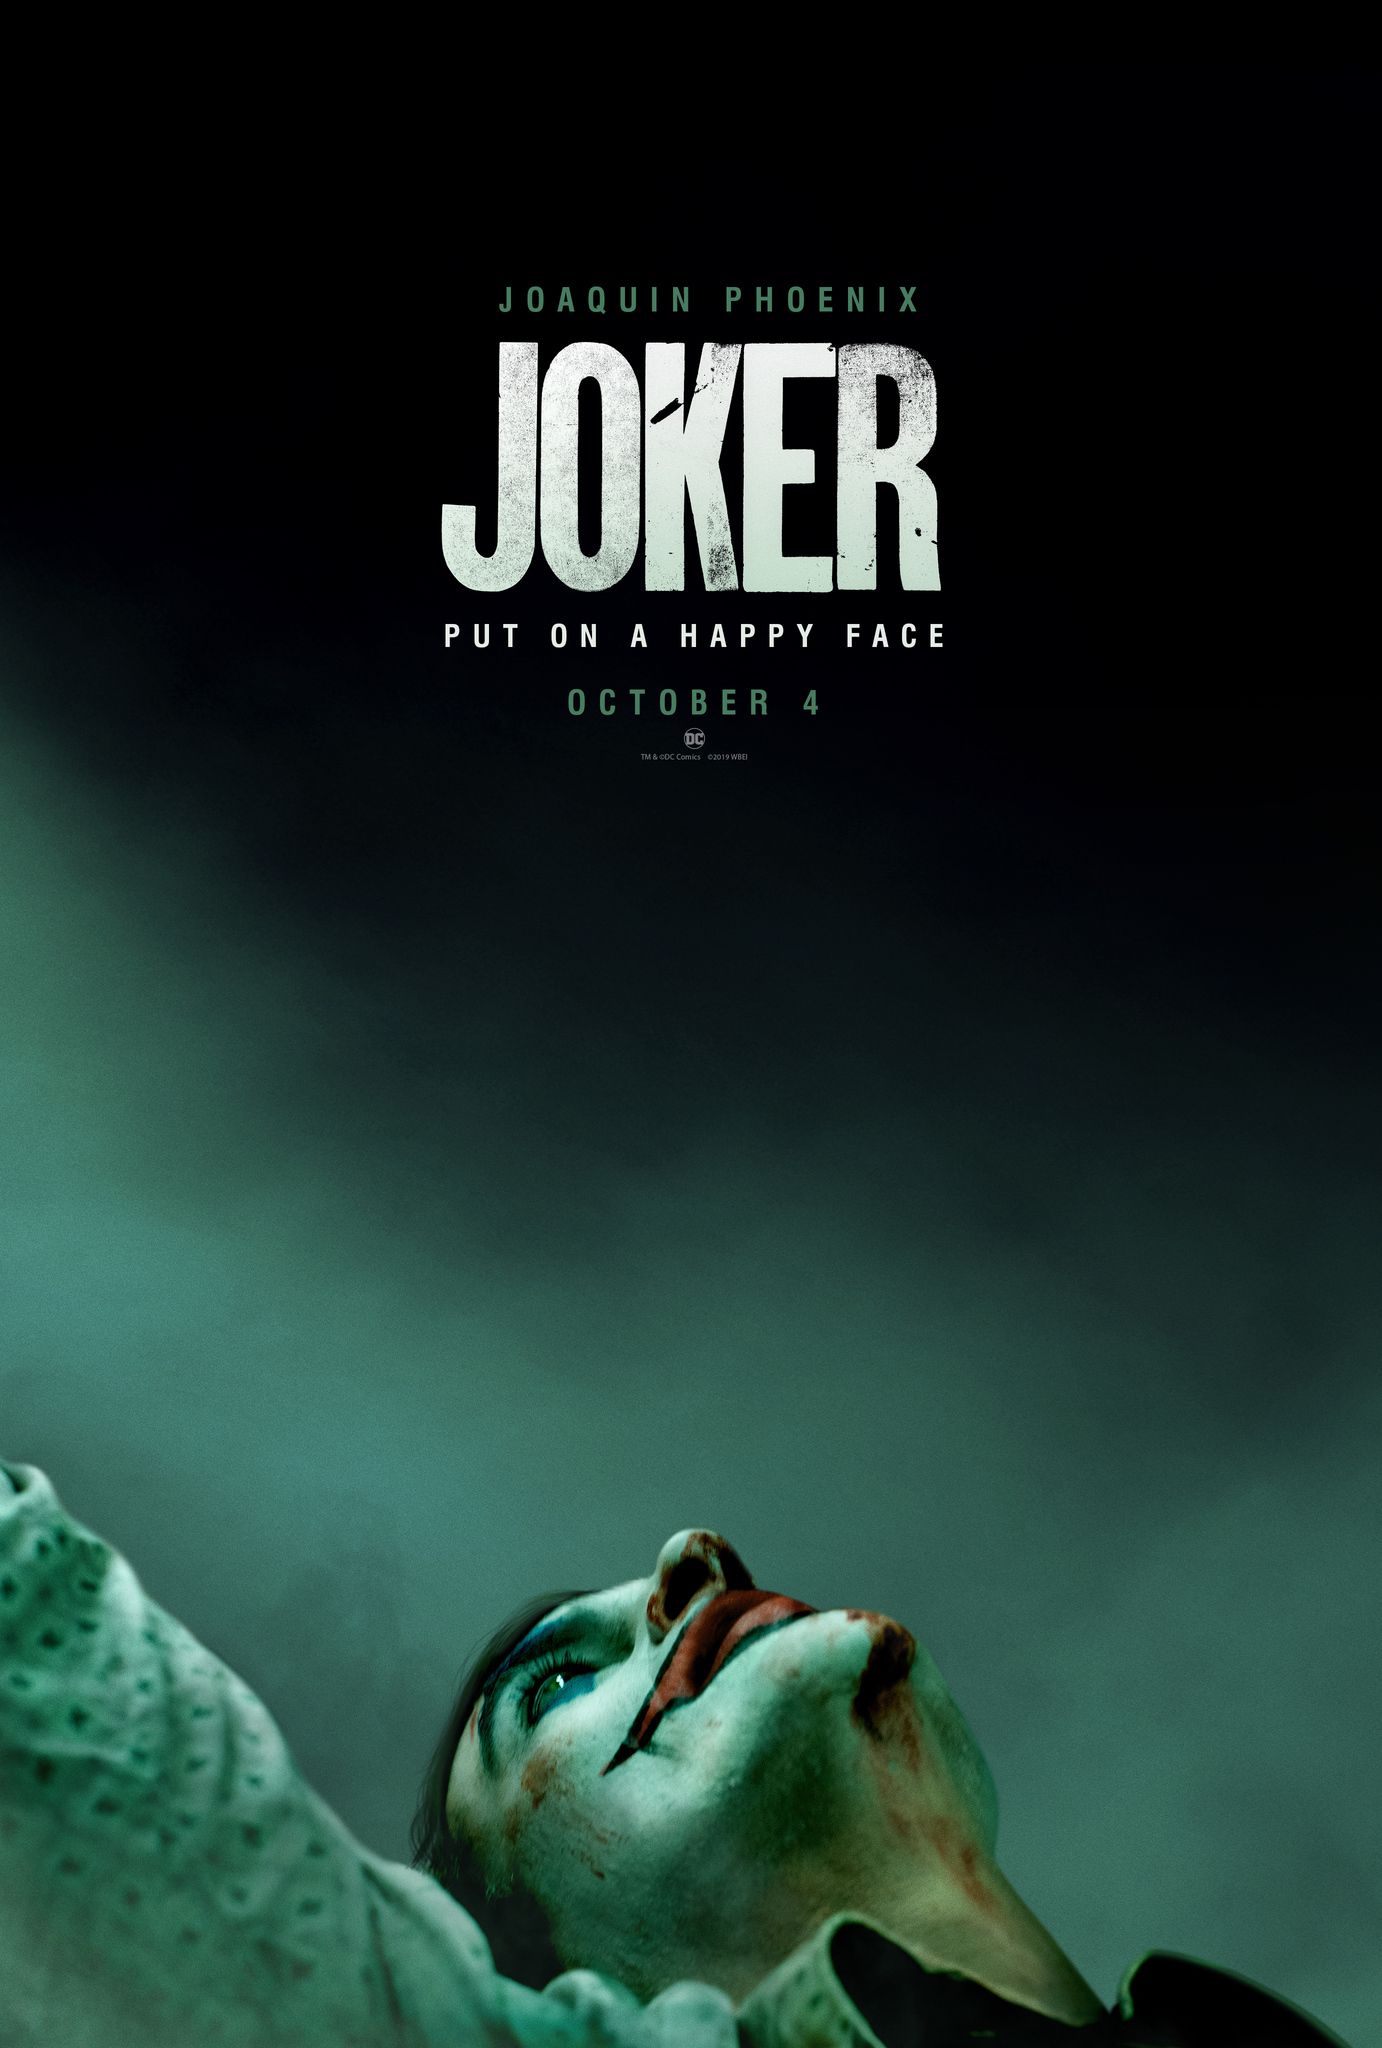 Free download Joker 2019 IMDb [1382x2048] for your Desktop, Mobile